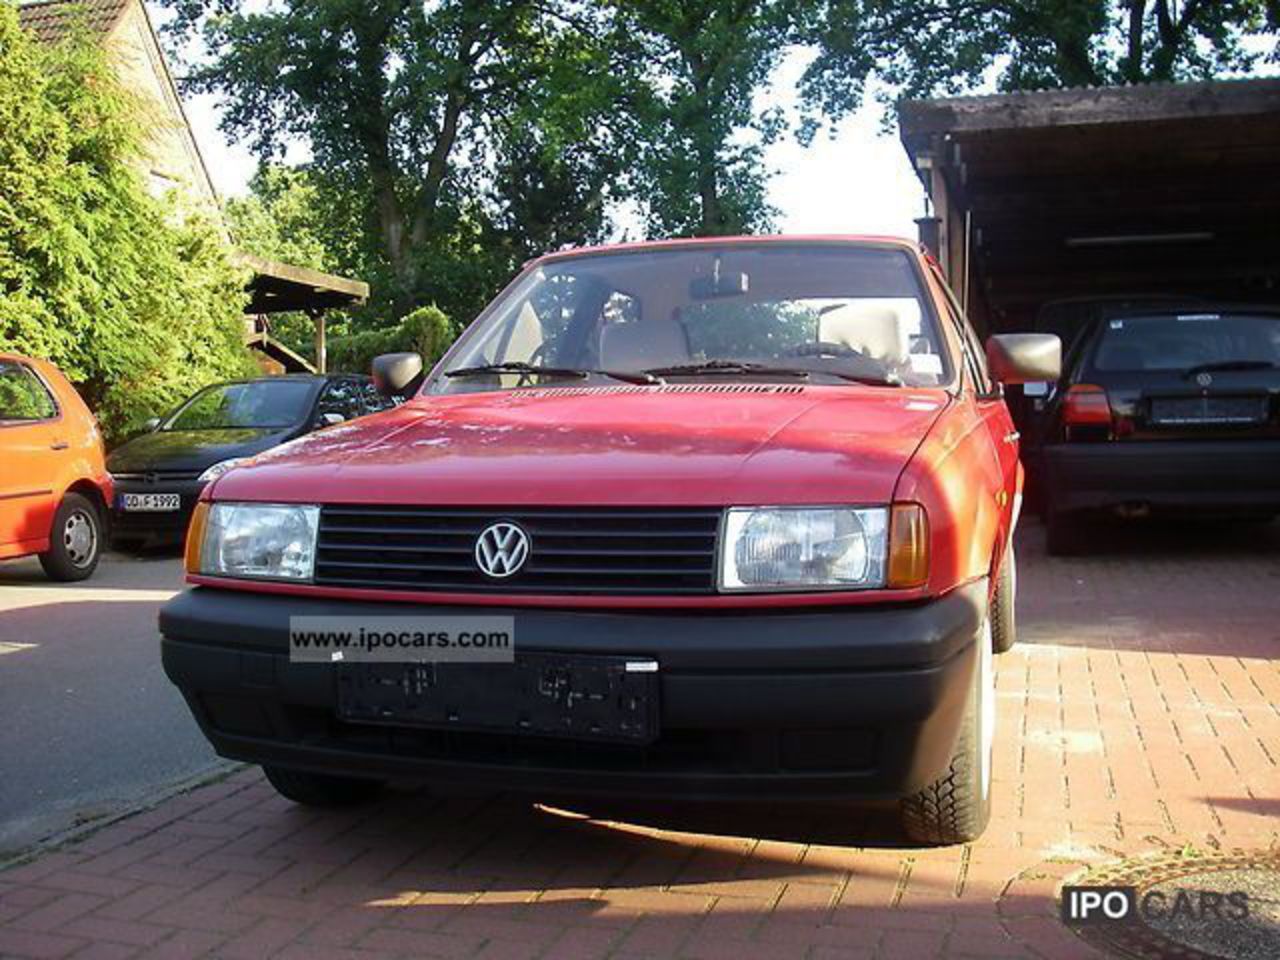 1992 Volkswagen Polo Fox Small Car